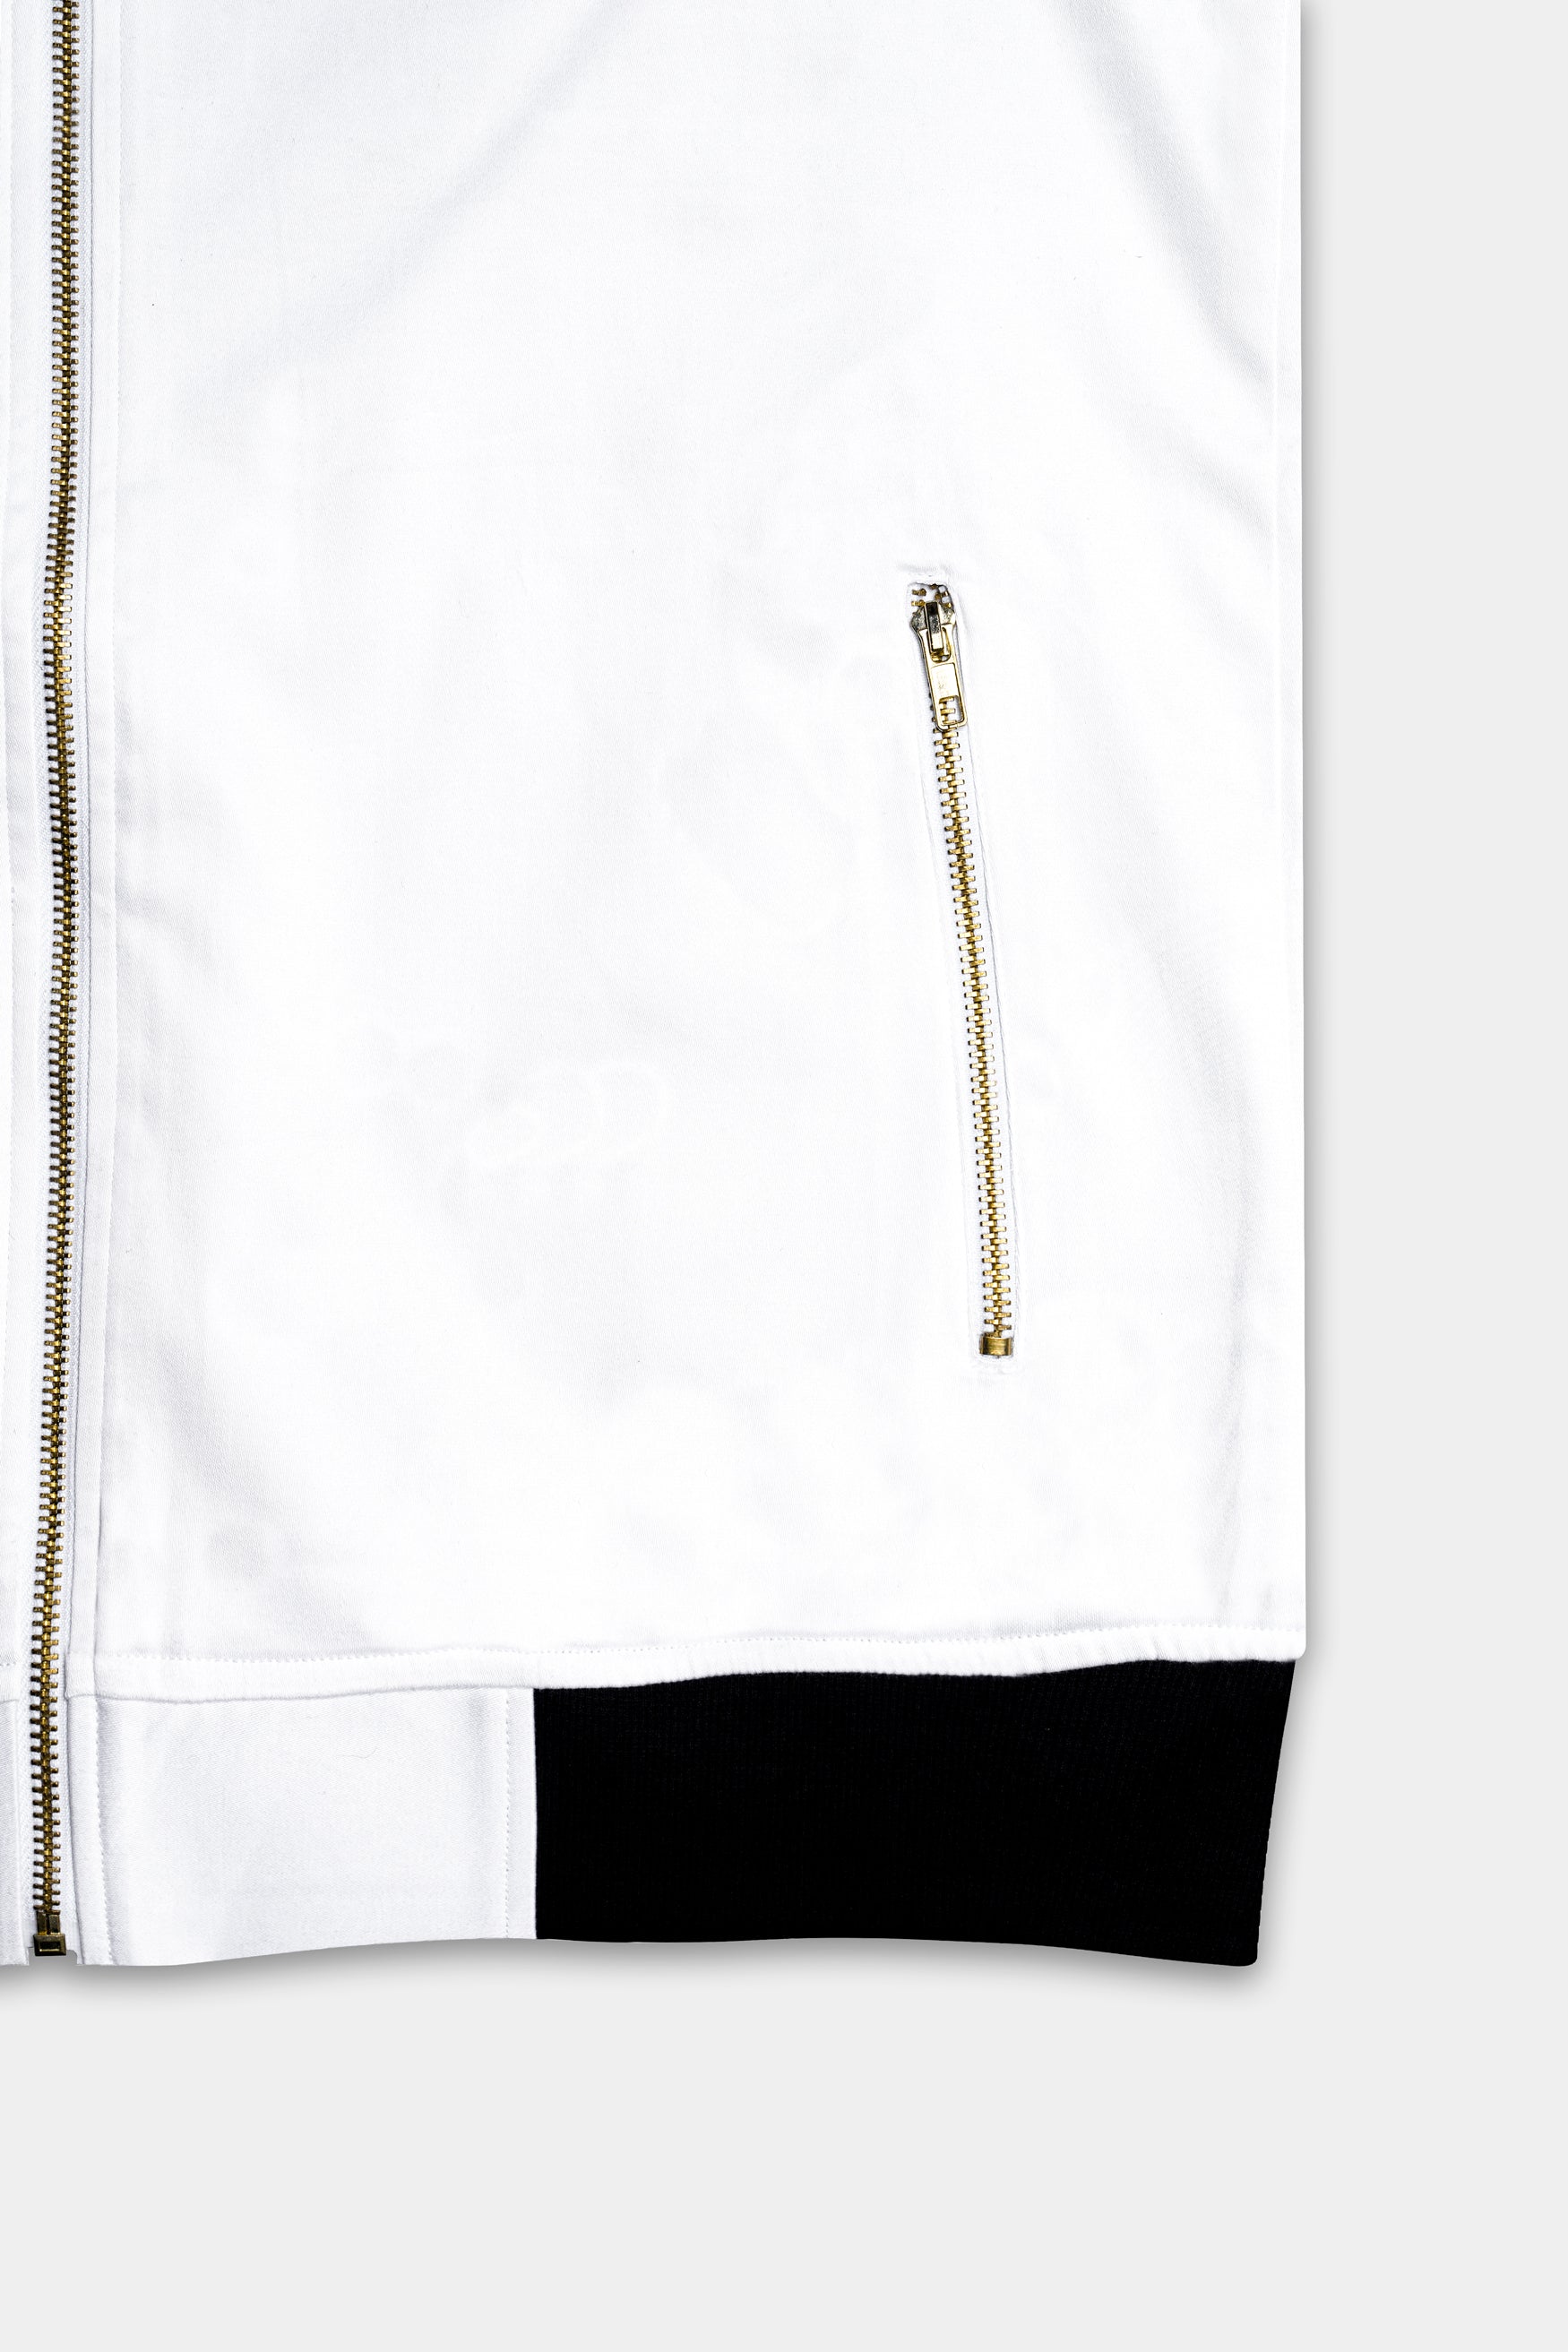 Bright White Lion Embroidered Chambray Designer Bomber Jacket